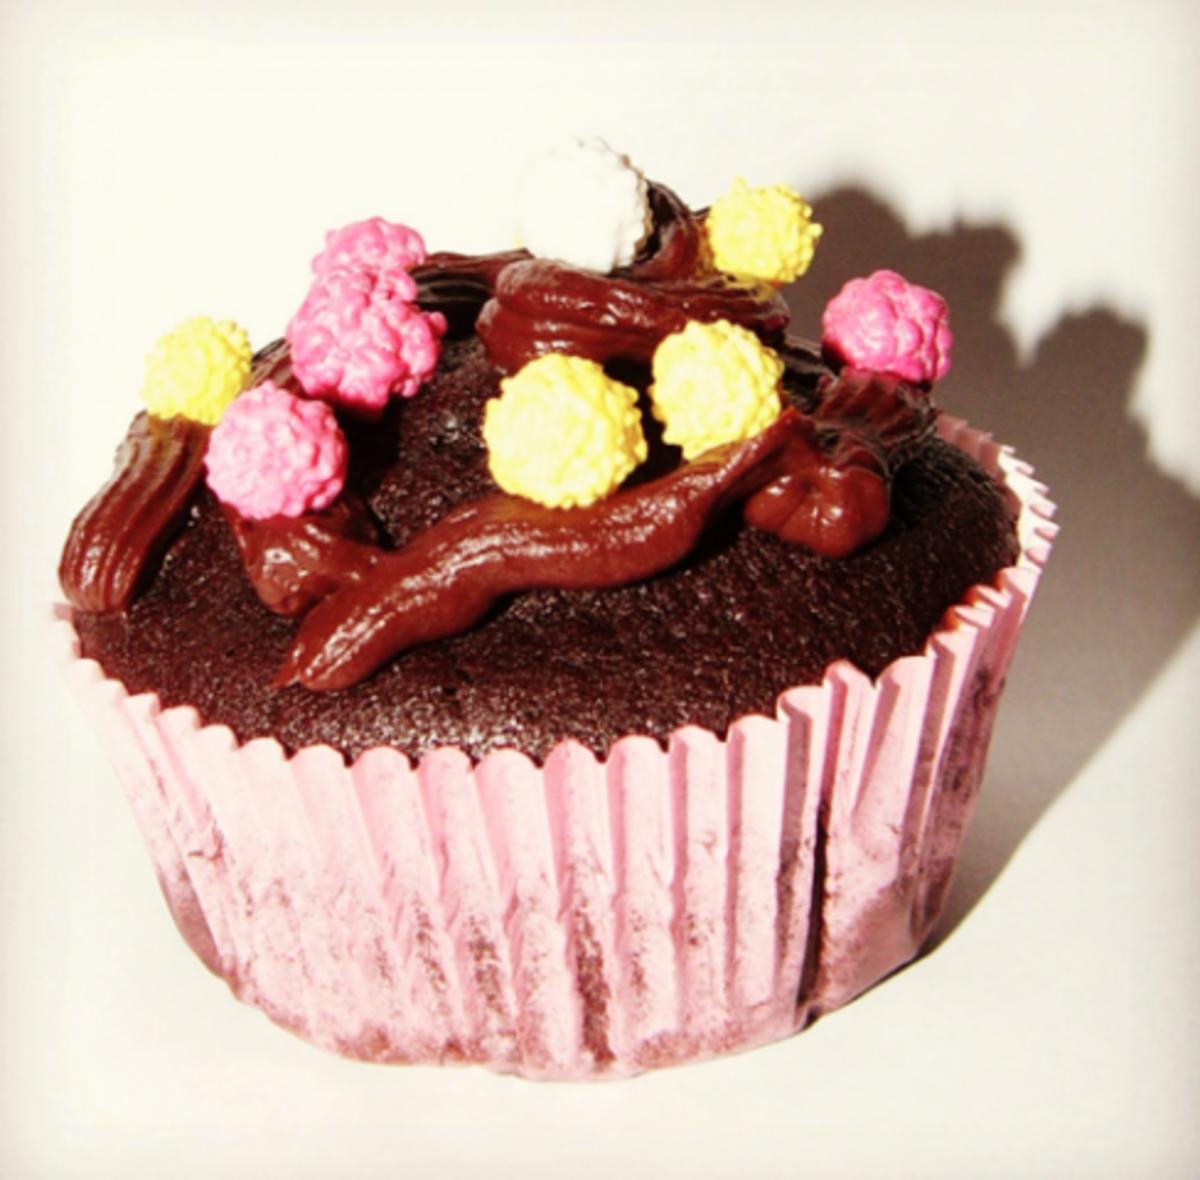 Schokoladen Cupcakes mit Schoko-Sahne-Frosting - Rezept - Bild Nr. 3